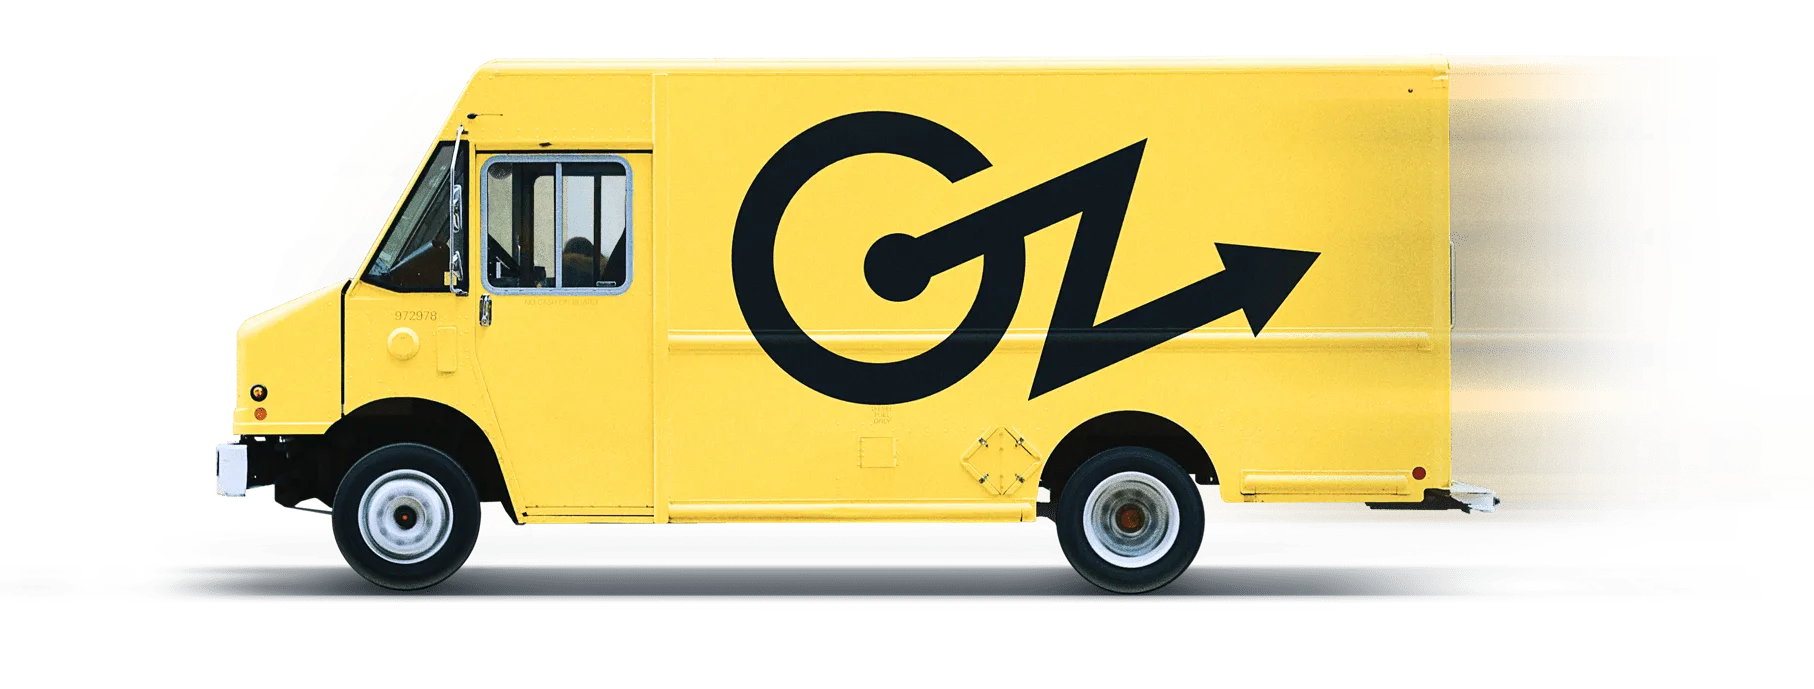 A yellow postal car with black Getzing logo